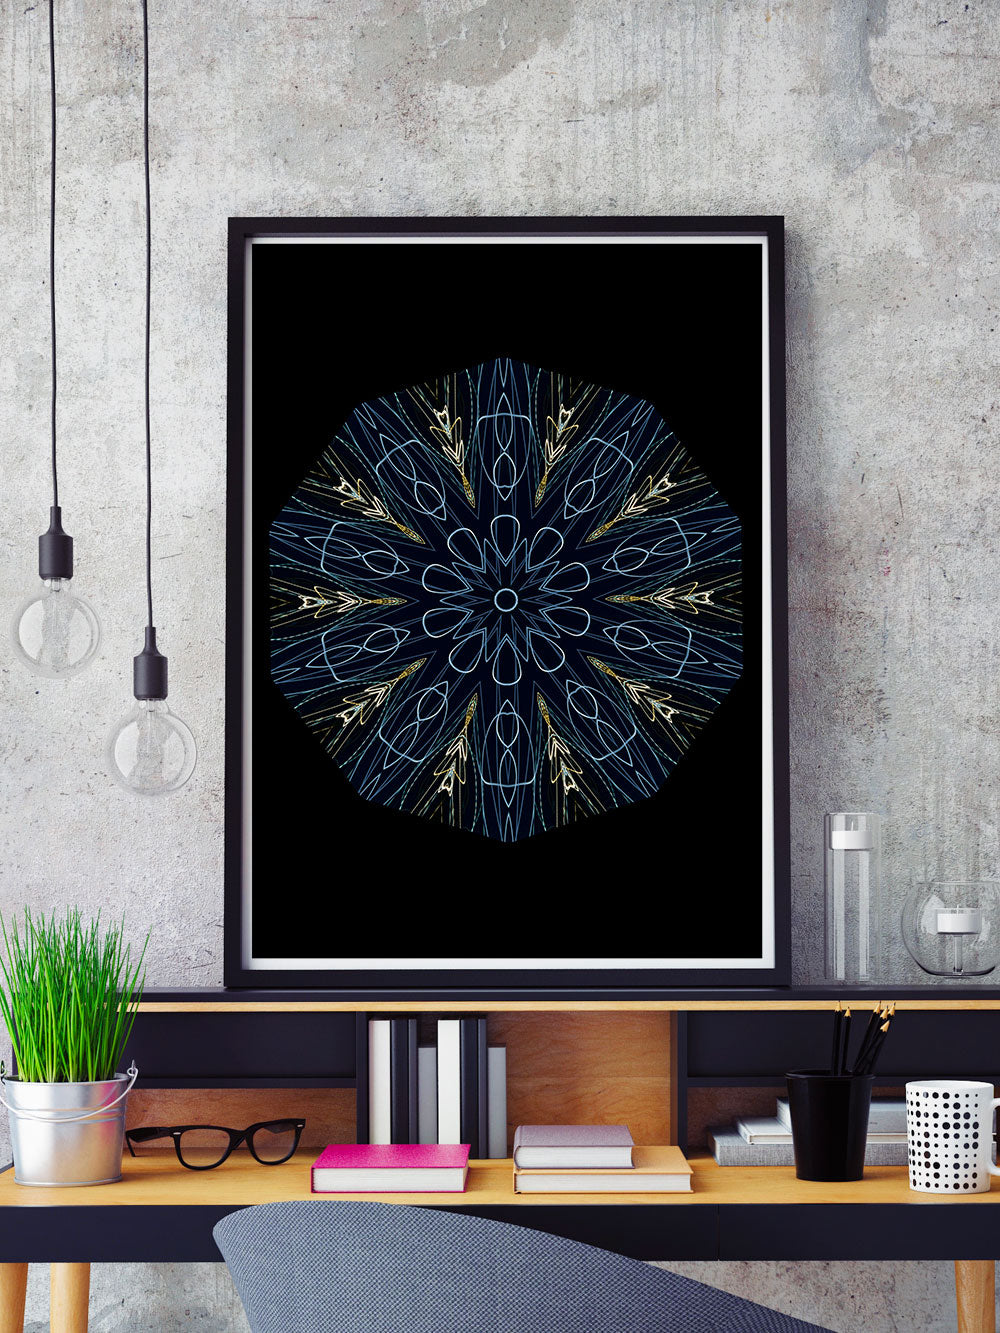 Asimov Kaleidoscope Print in a frame on a shelf